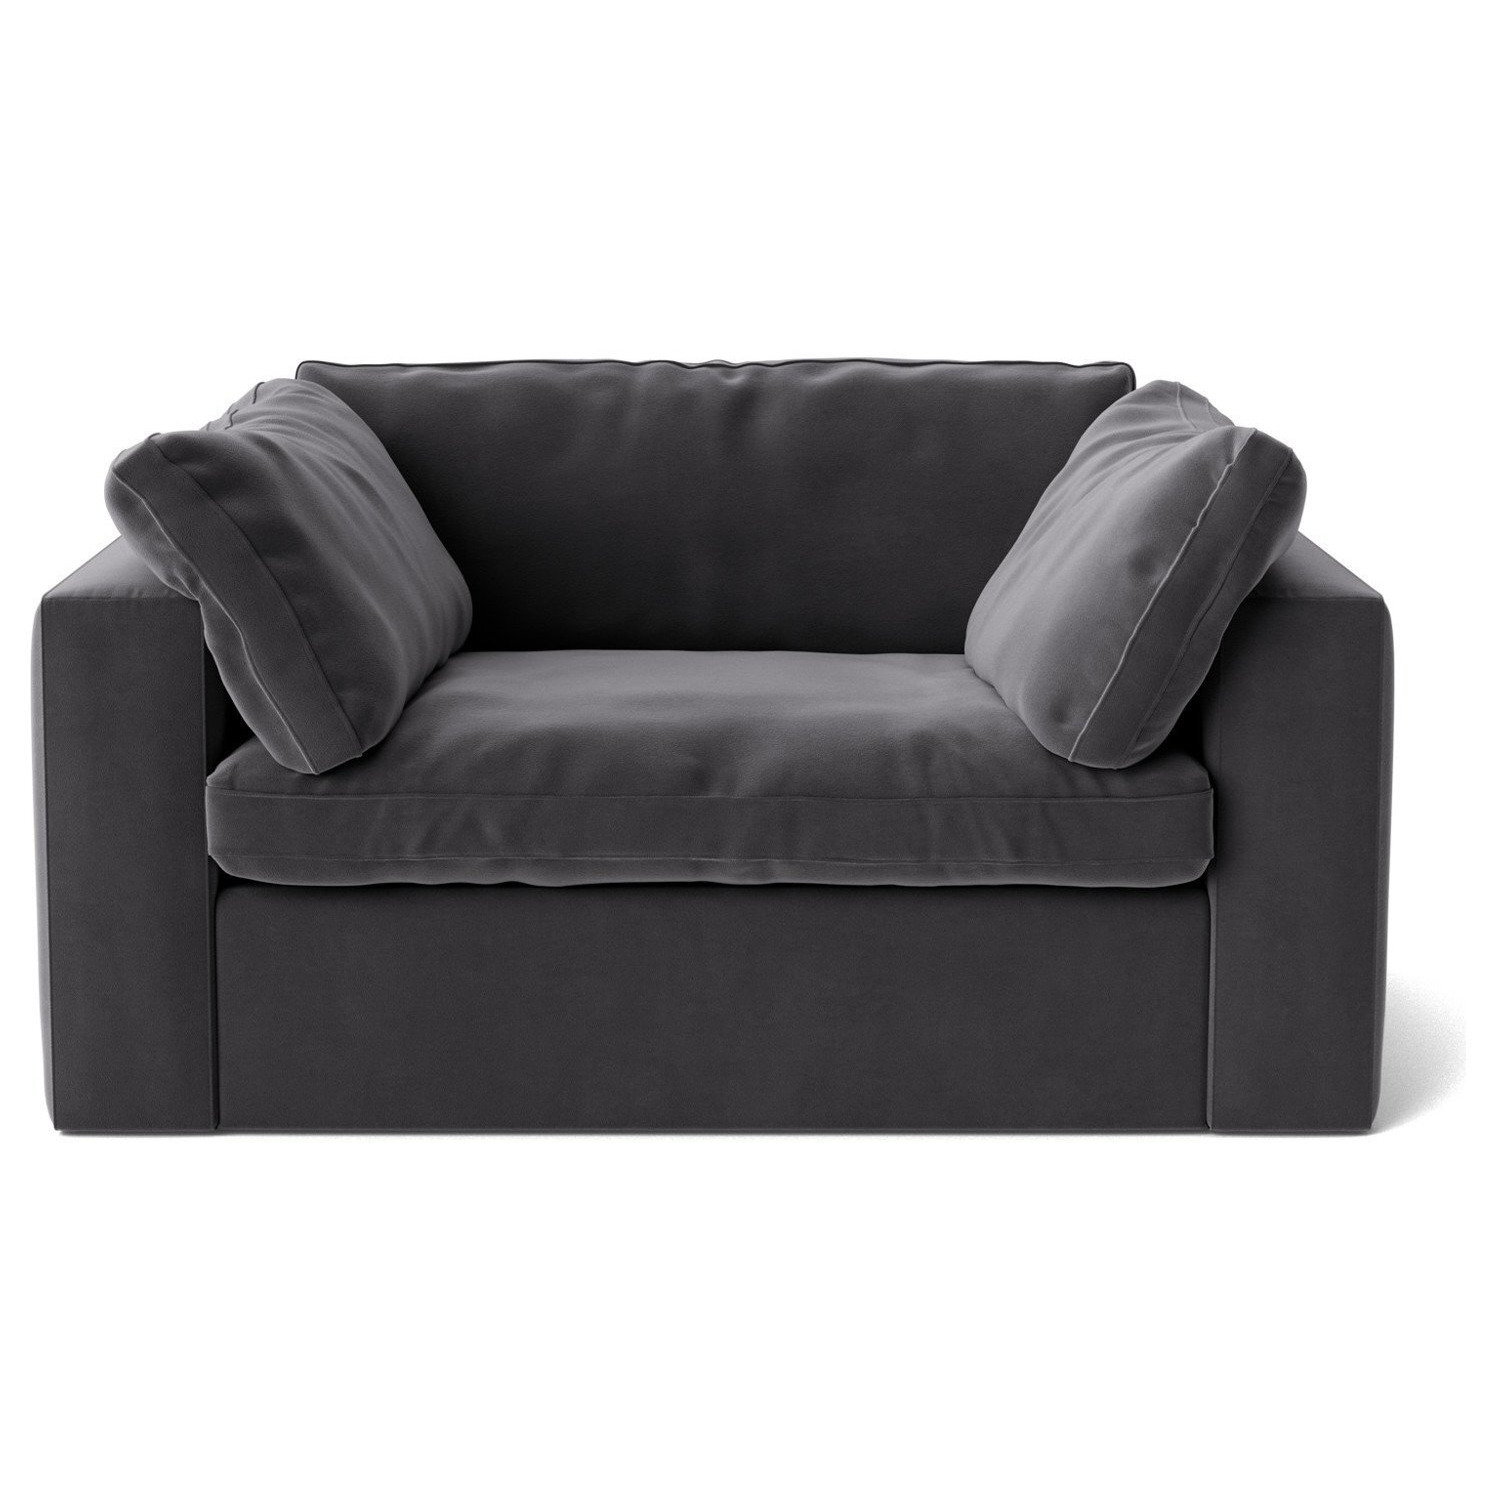 Swoon Seattle Velvet Cuddle Chair - Granite Grey - image 1